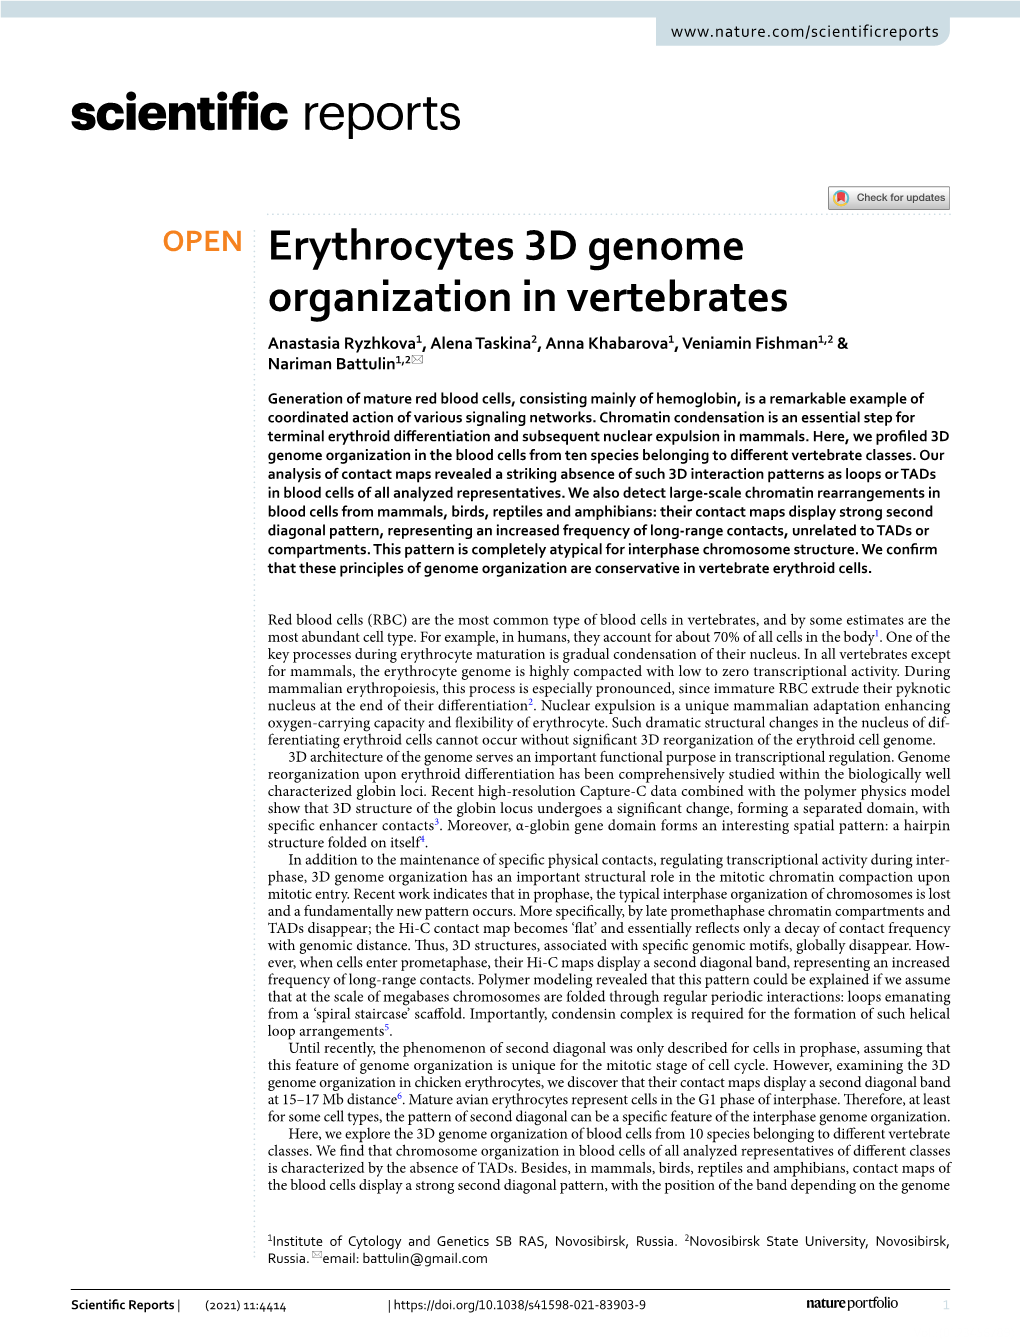 Erythrocytes 3D Genome Organization in Vertebrates Anastasia Ryzhkova1, Alena Taskina2, Anna Khabarova1, Veniamin Fishman1,2 & Nariman Battulin1,2*